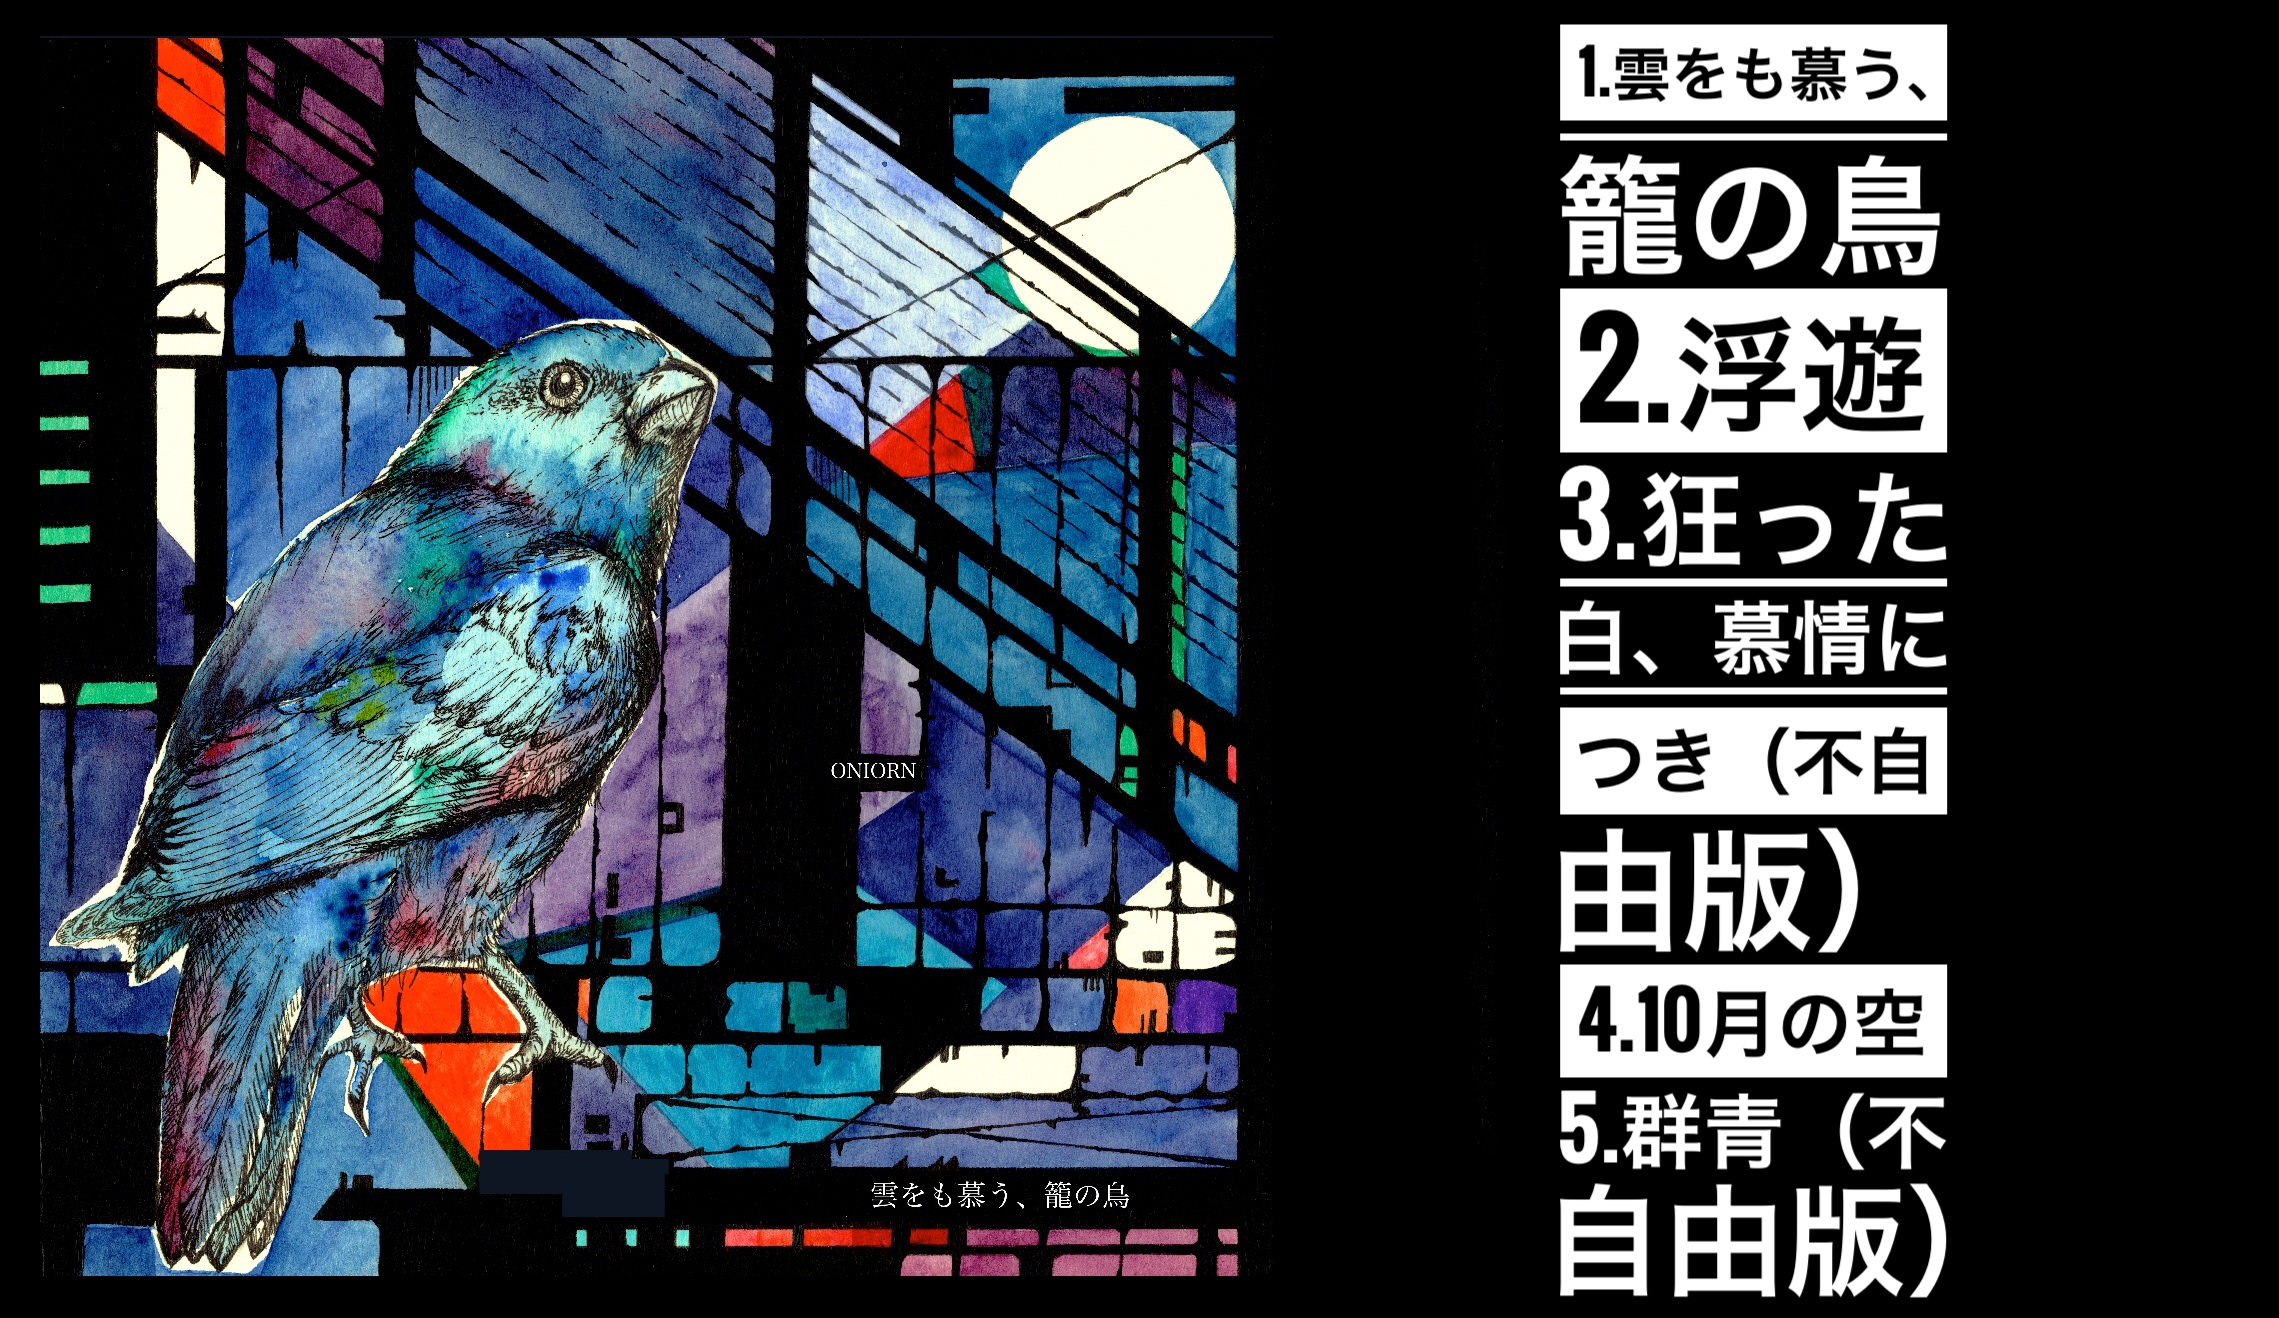 6/9 2nd EP "雲をも慕う、籠の鳥"